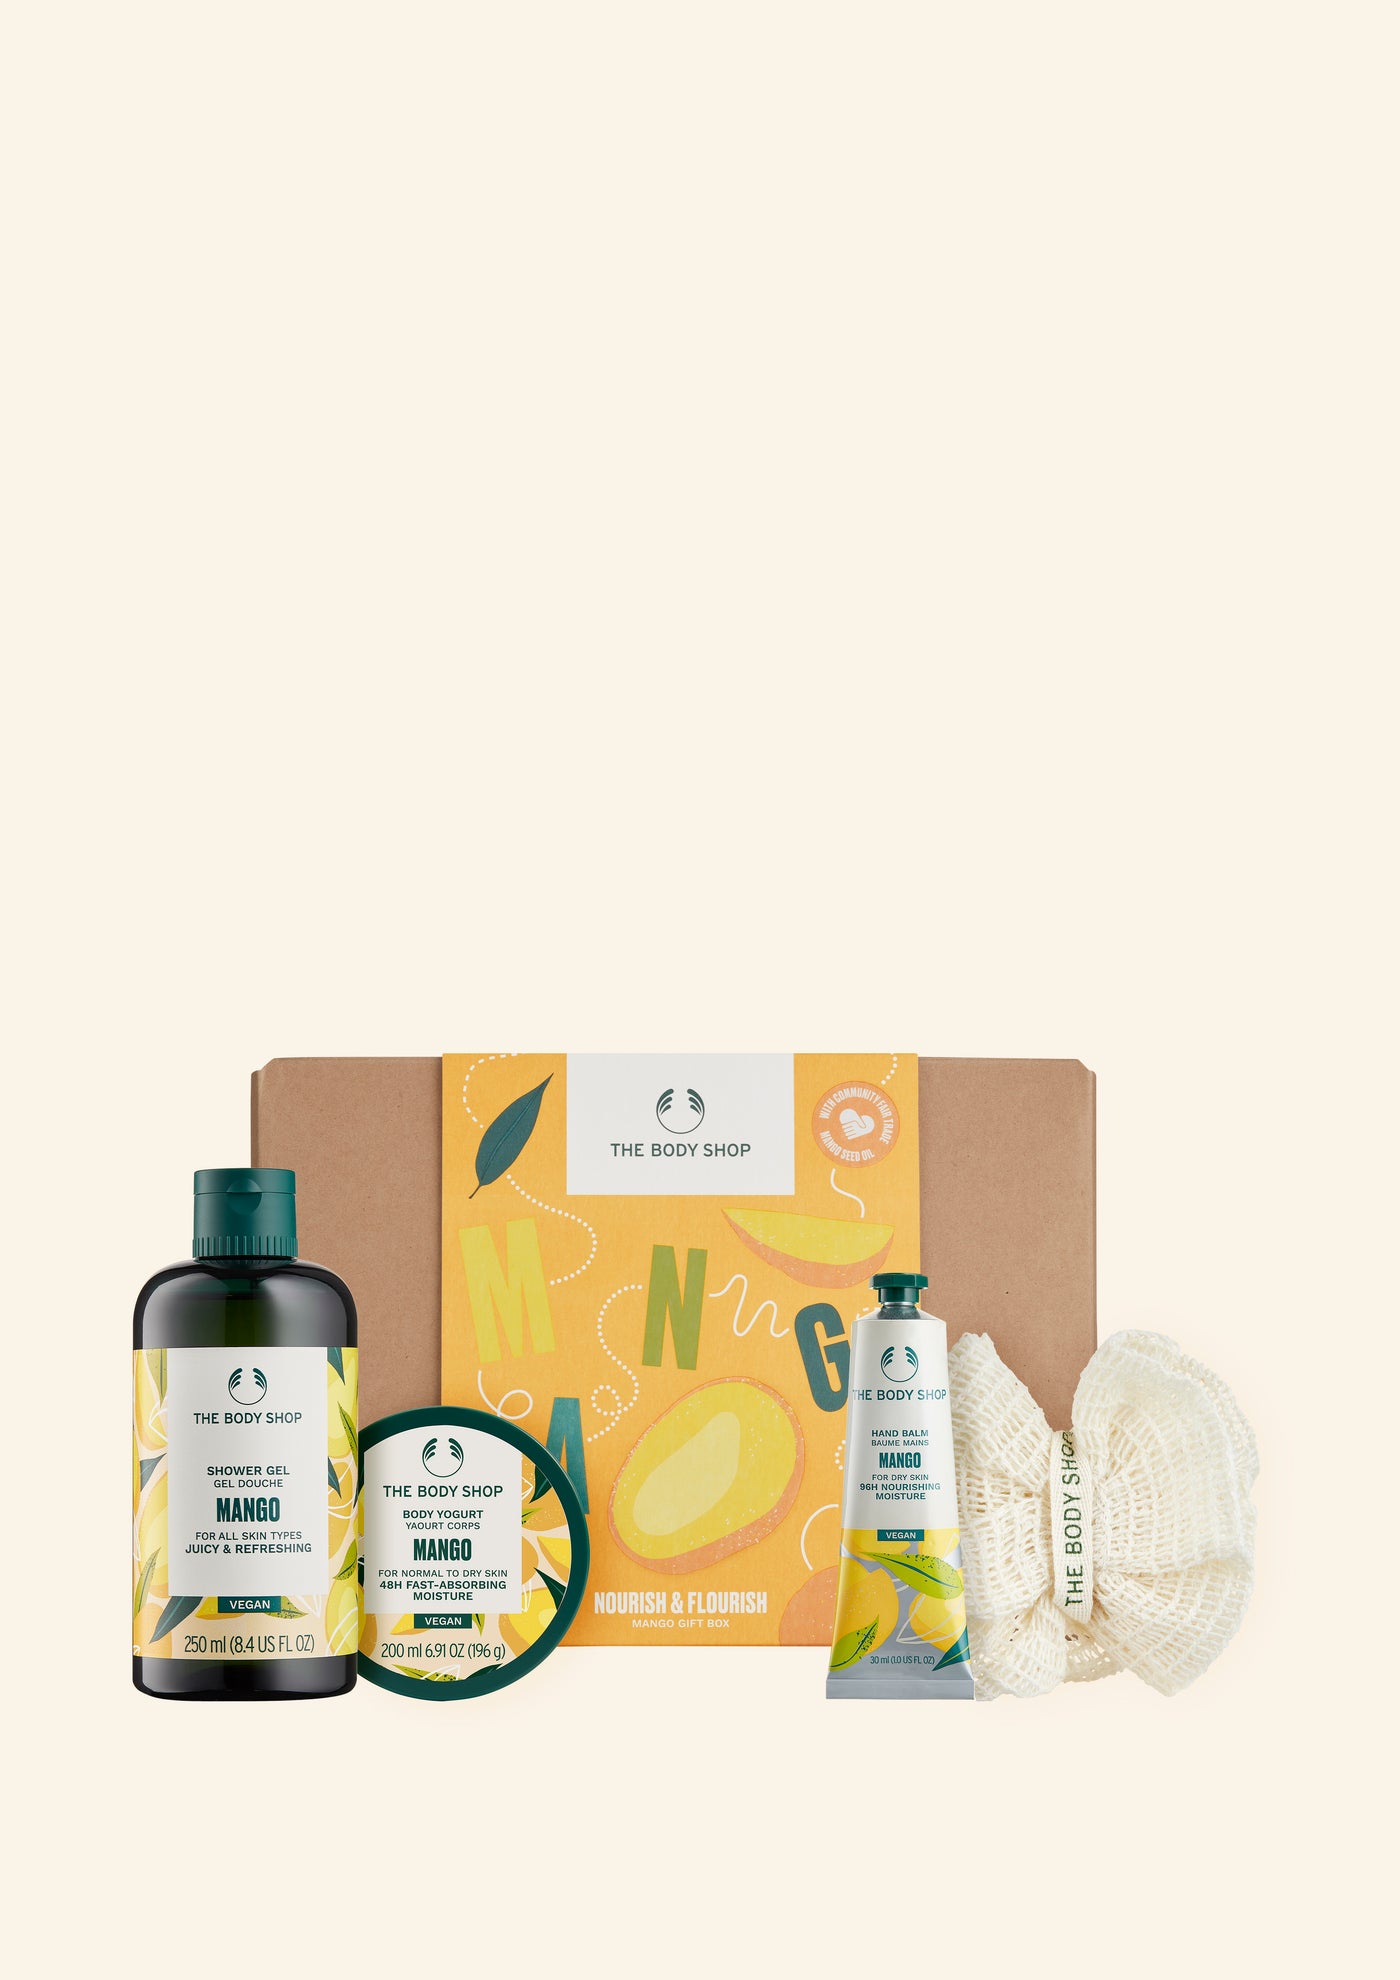 Nourish & Flourish Mango Gift Box